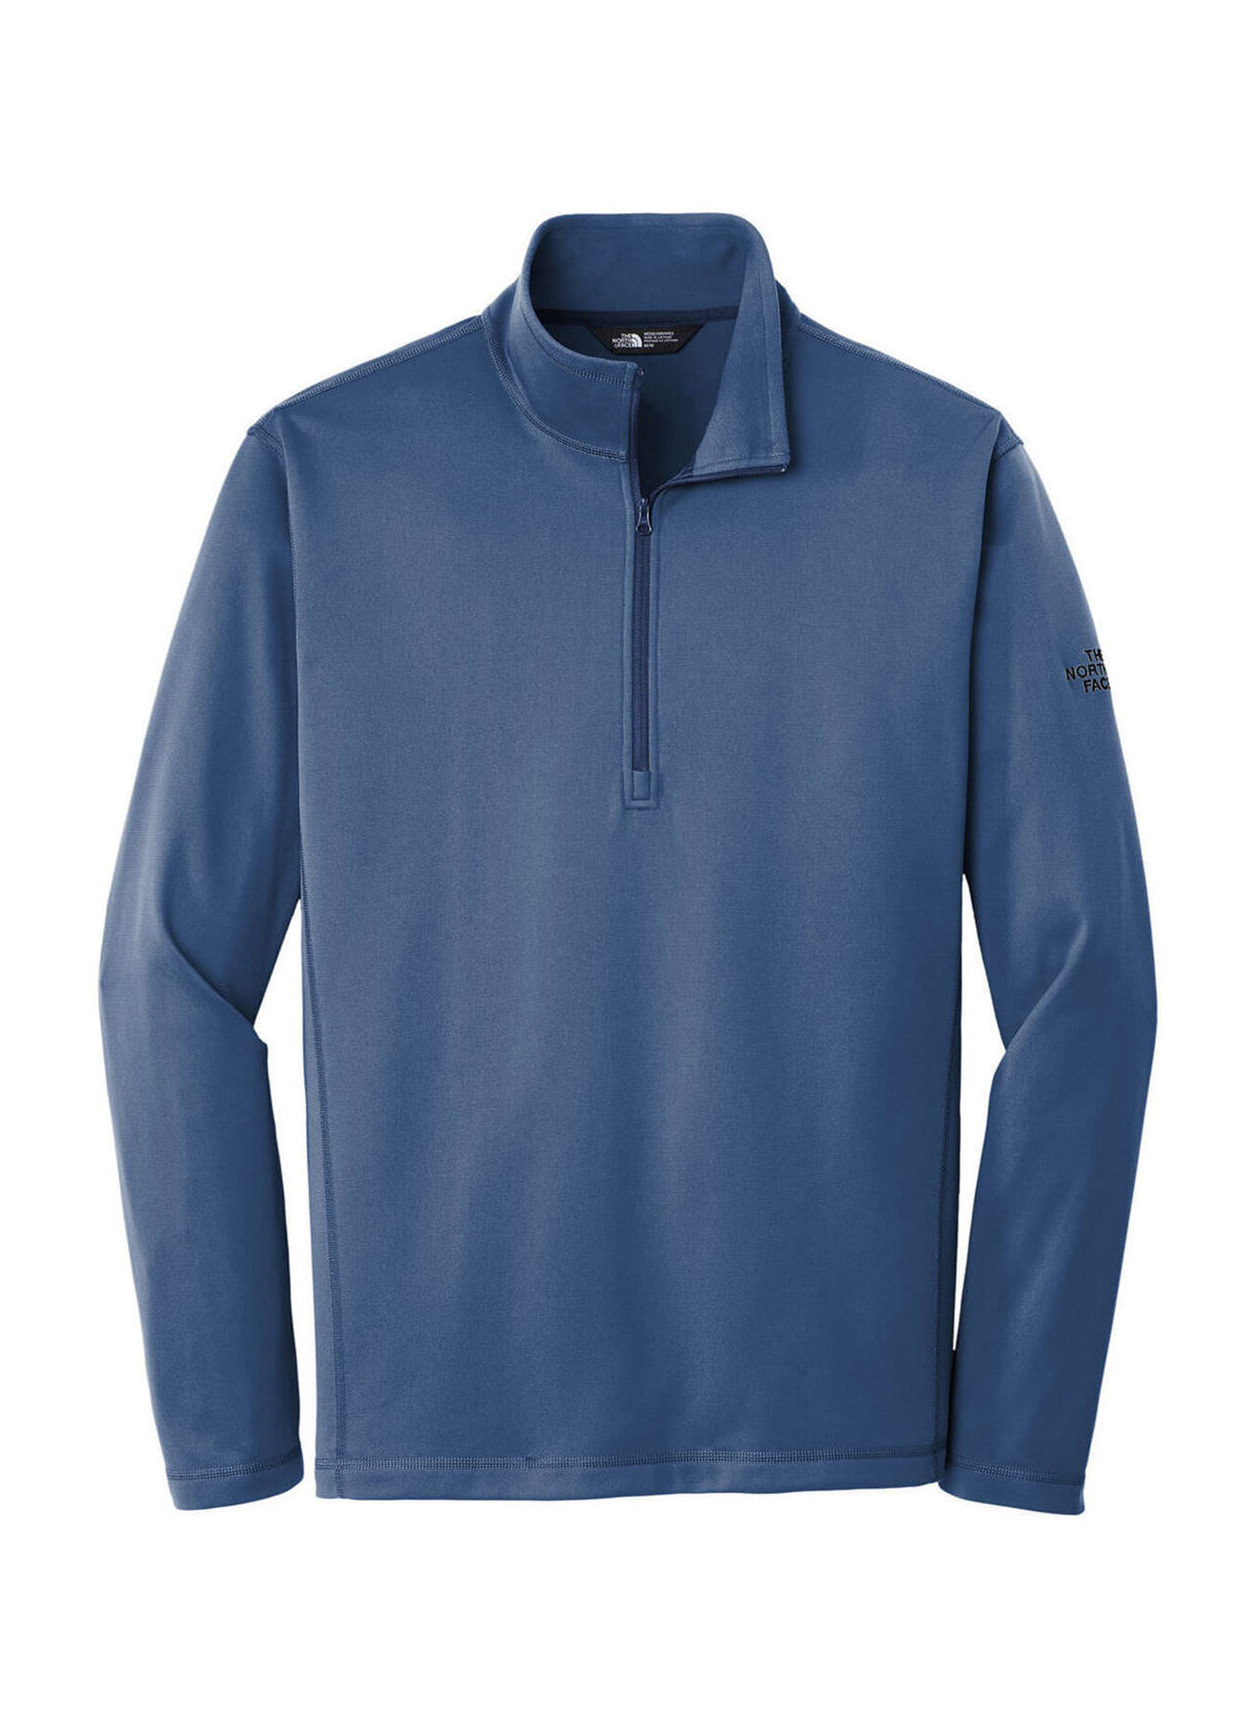 The North Face Men's Blue Wing Tech Quarter-Zip | Custom Pullovers